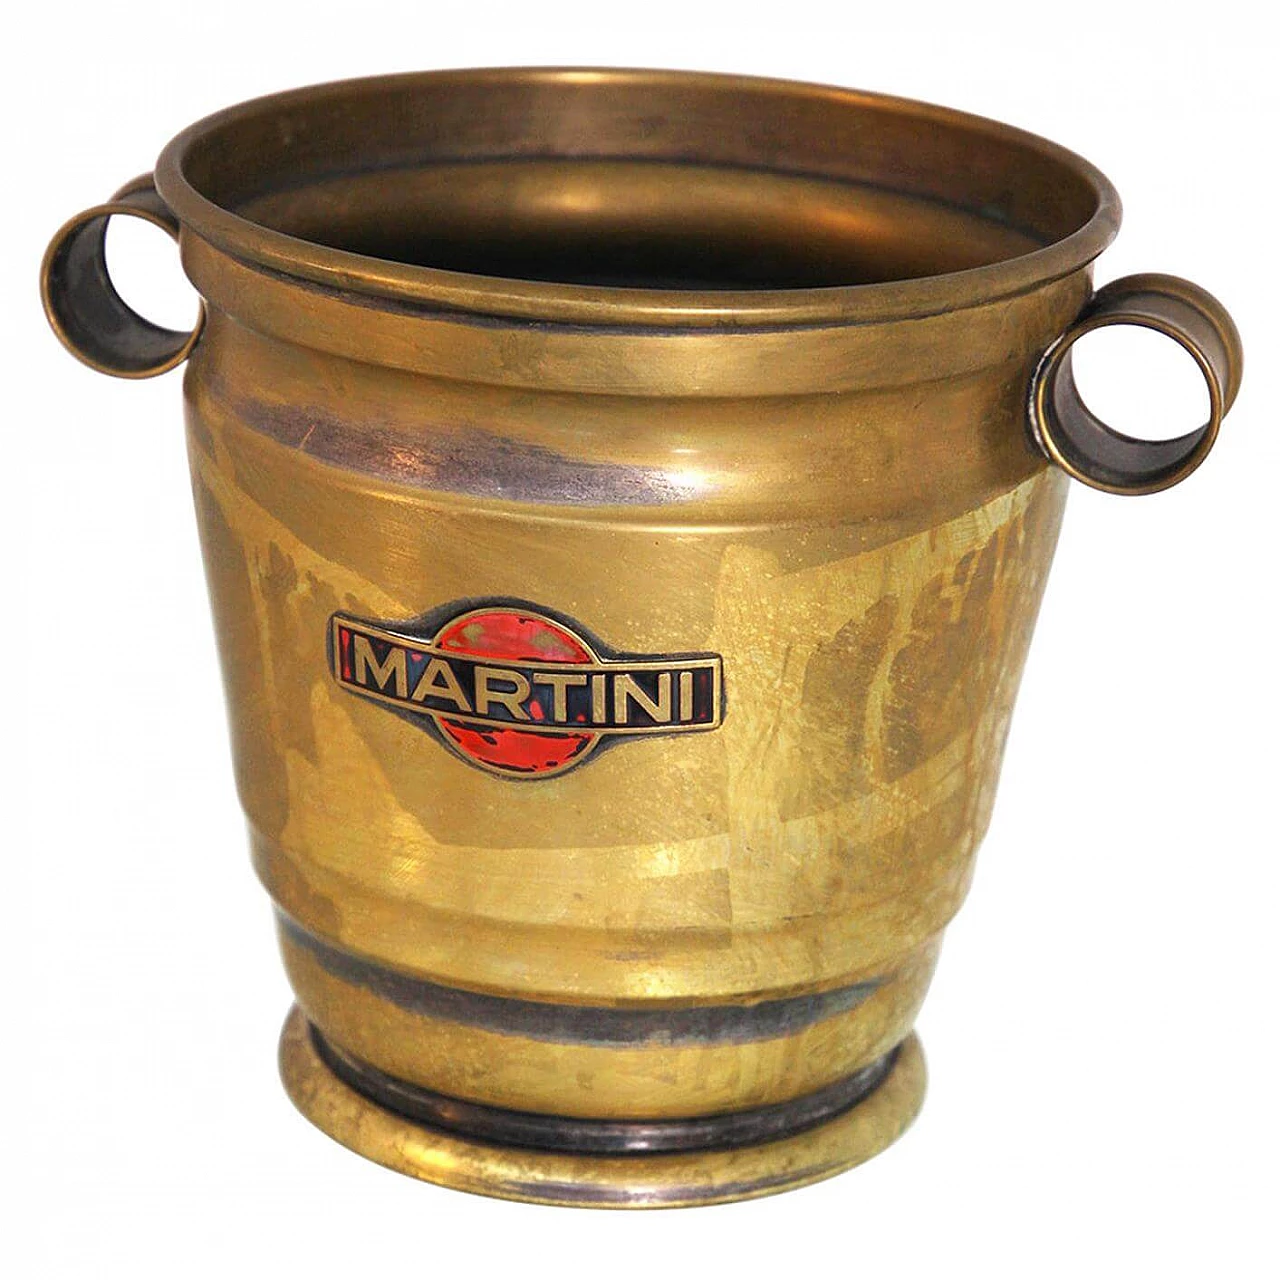 Martini ice bucket with original logo in nickel-plated brass, 1950s 1407852